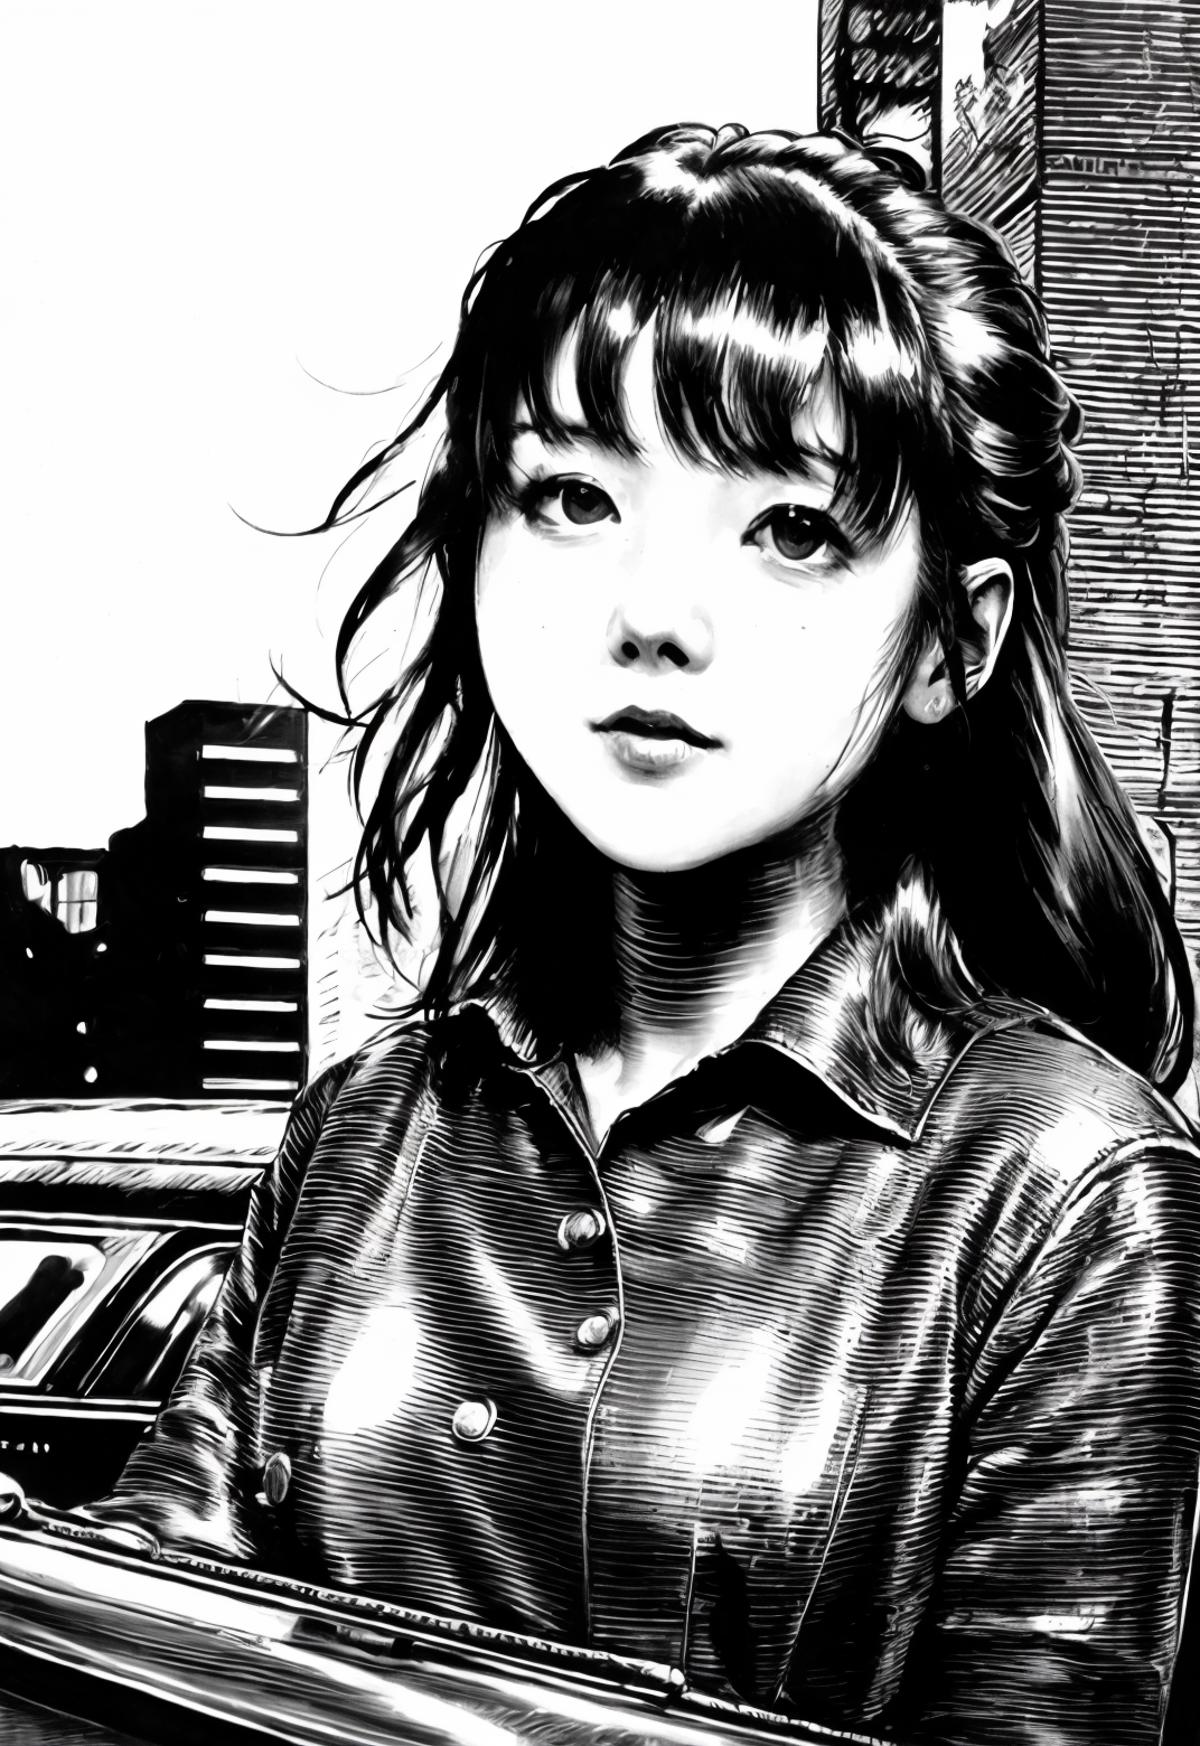 老漫画_Monochrome manga image by PAC_songbai